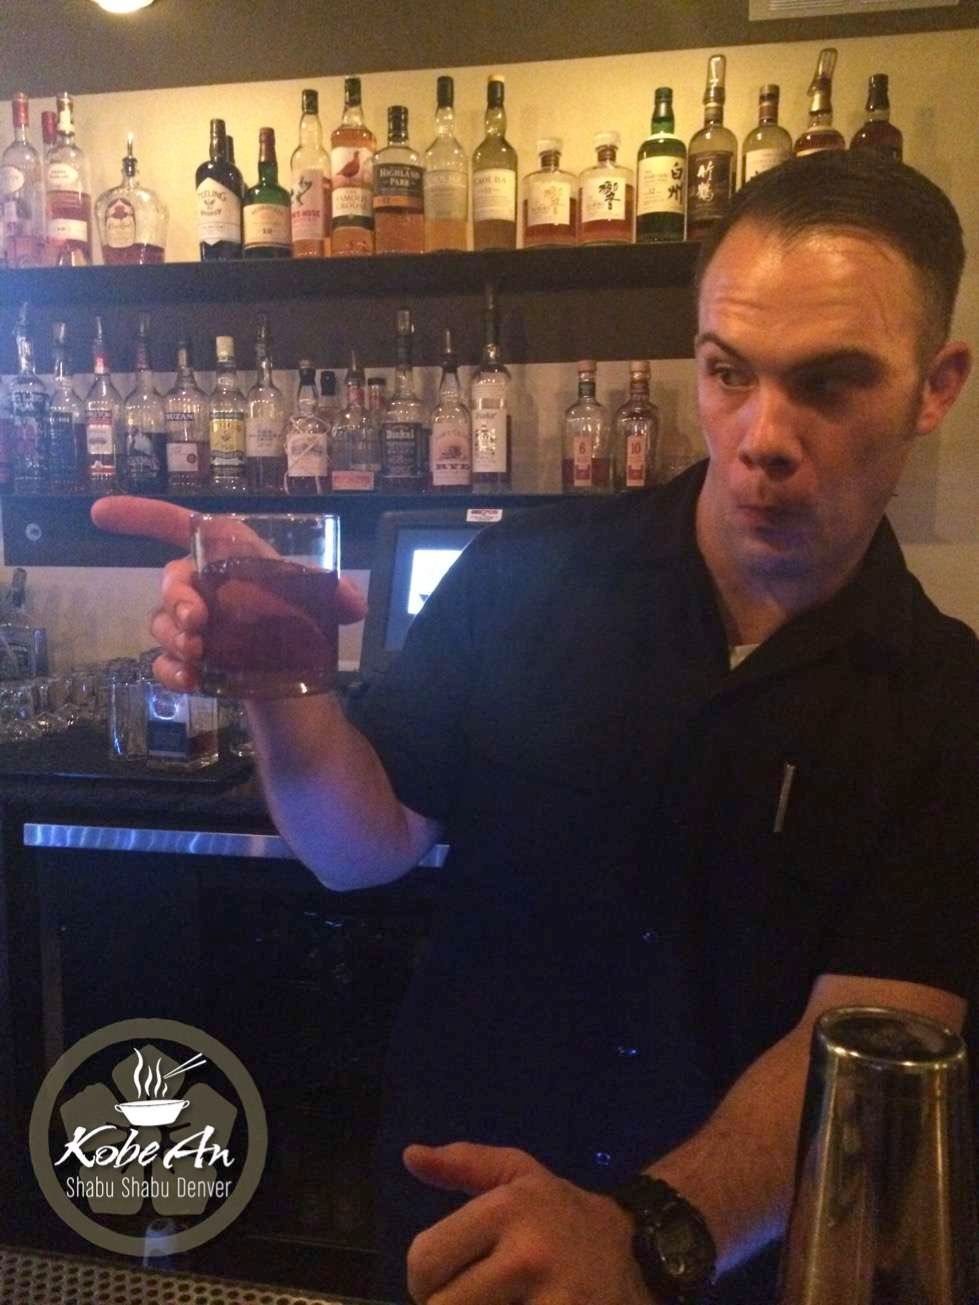 a bartender holds a glass in front of a shelf full of liquor bottles